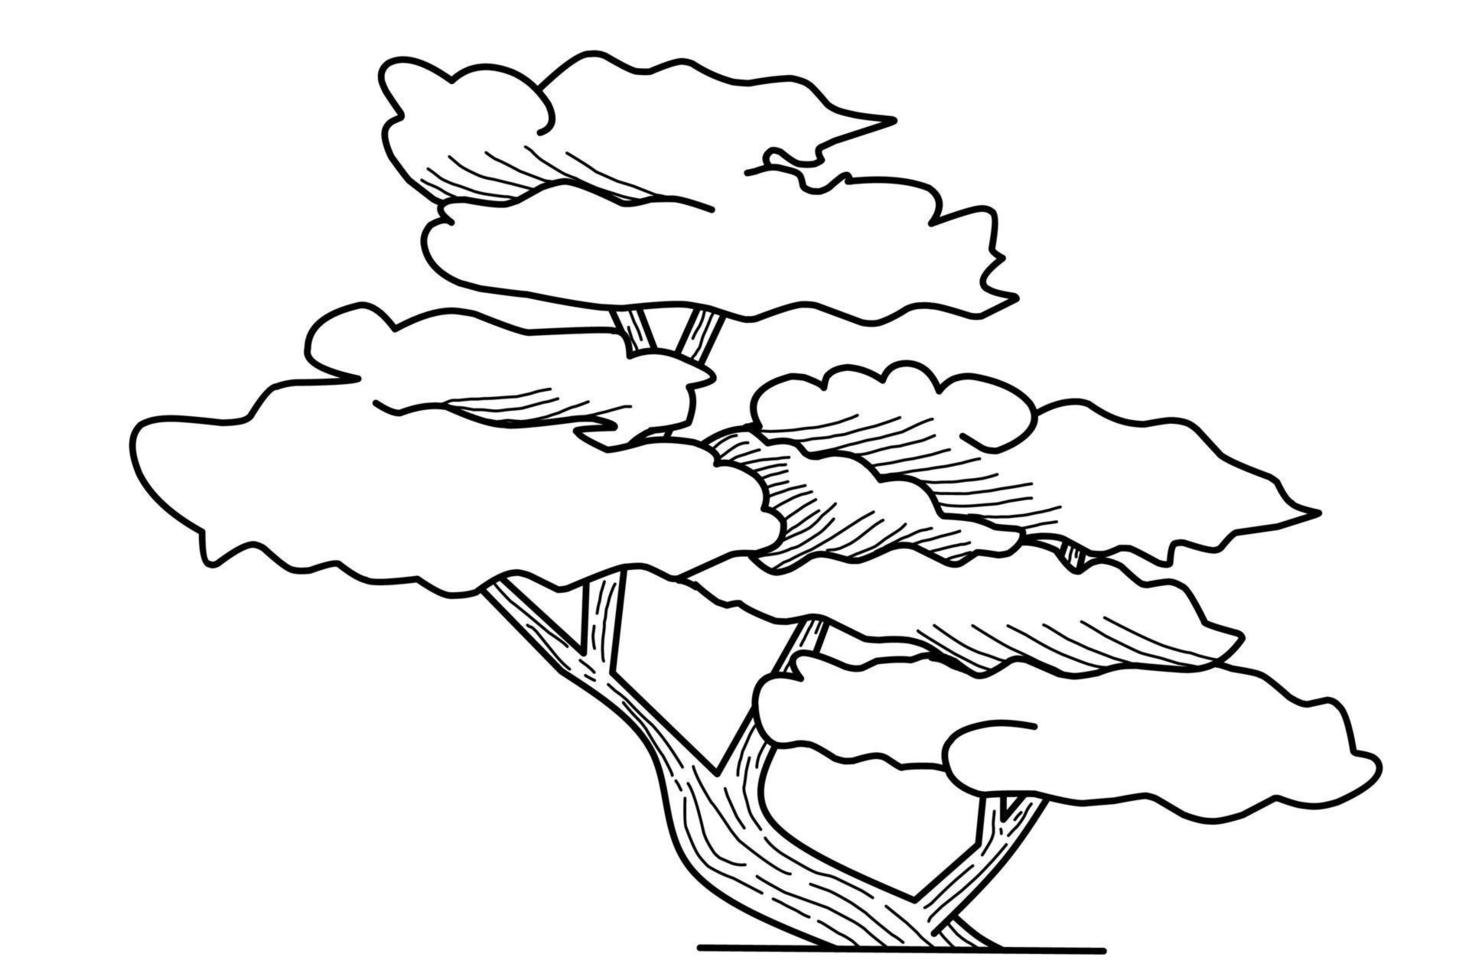 tree sketch illustration, coloring book design vector